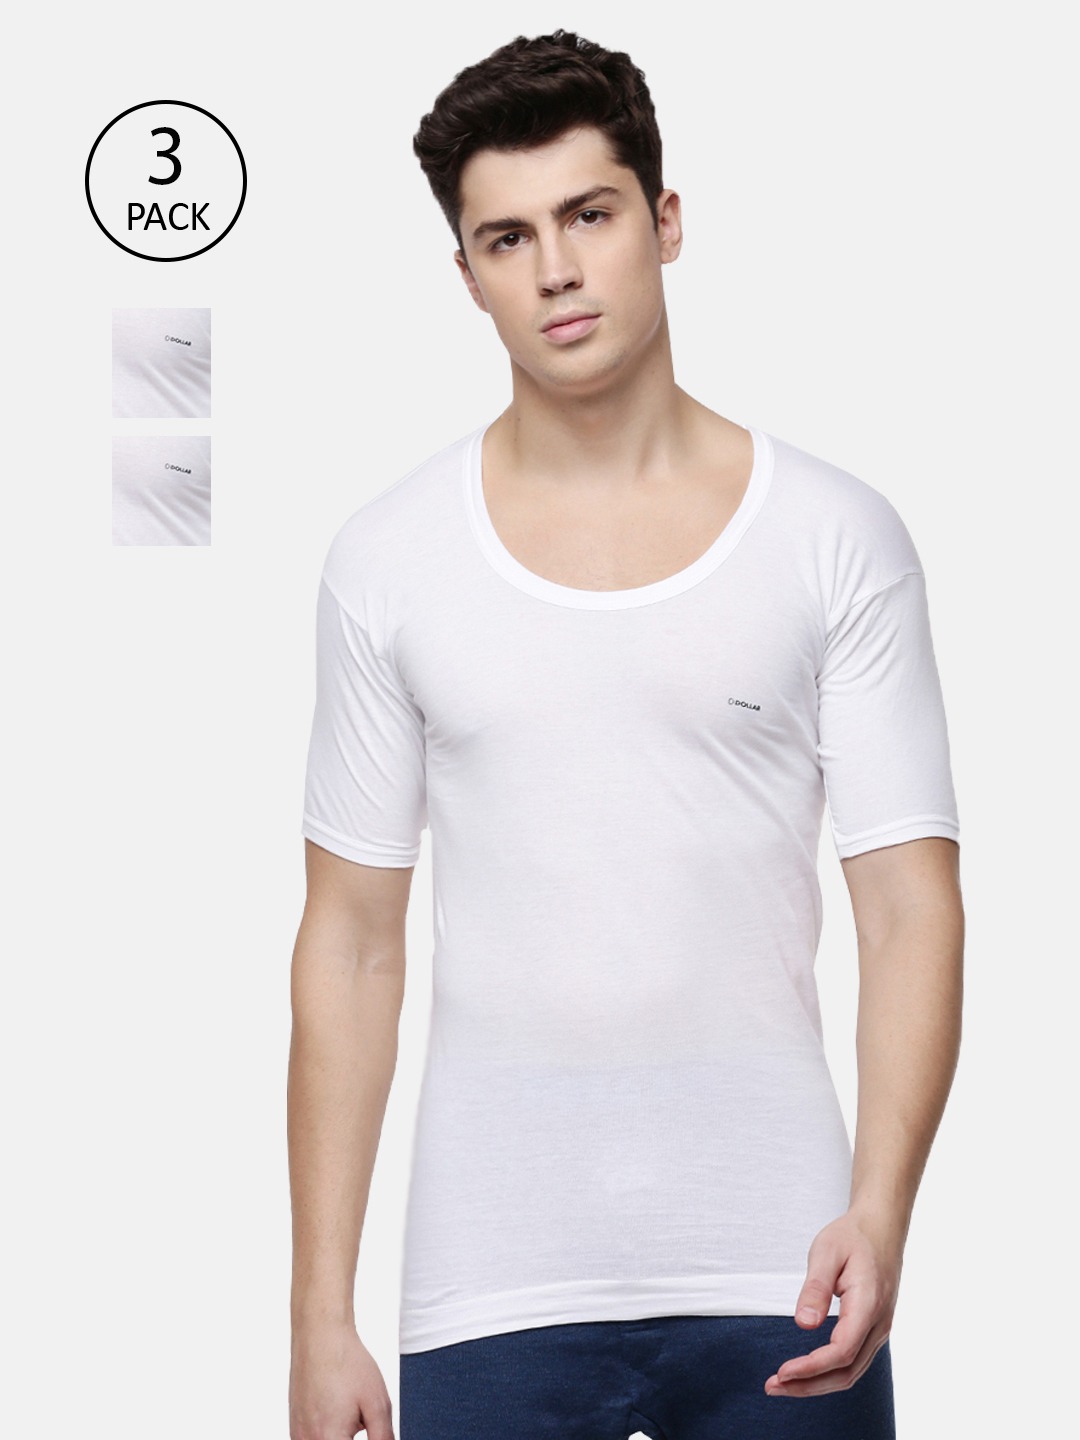 Clothing Innerwear Vests | Dollar Bigboss Pack of 3 White Innerwear Vests MDVE-02-PO3 - CG17677